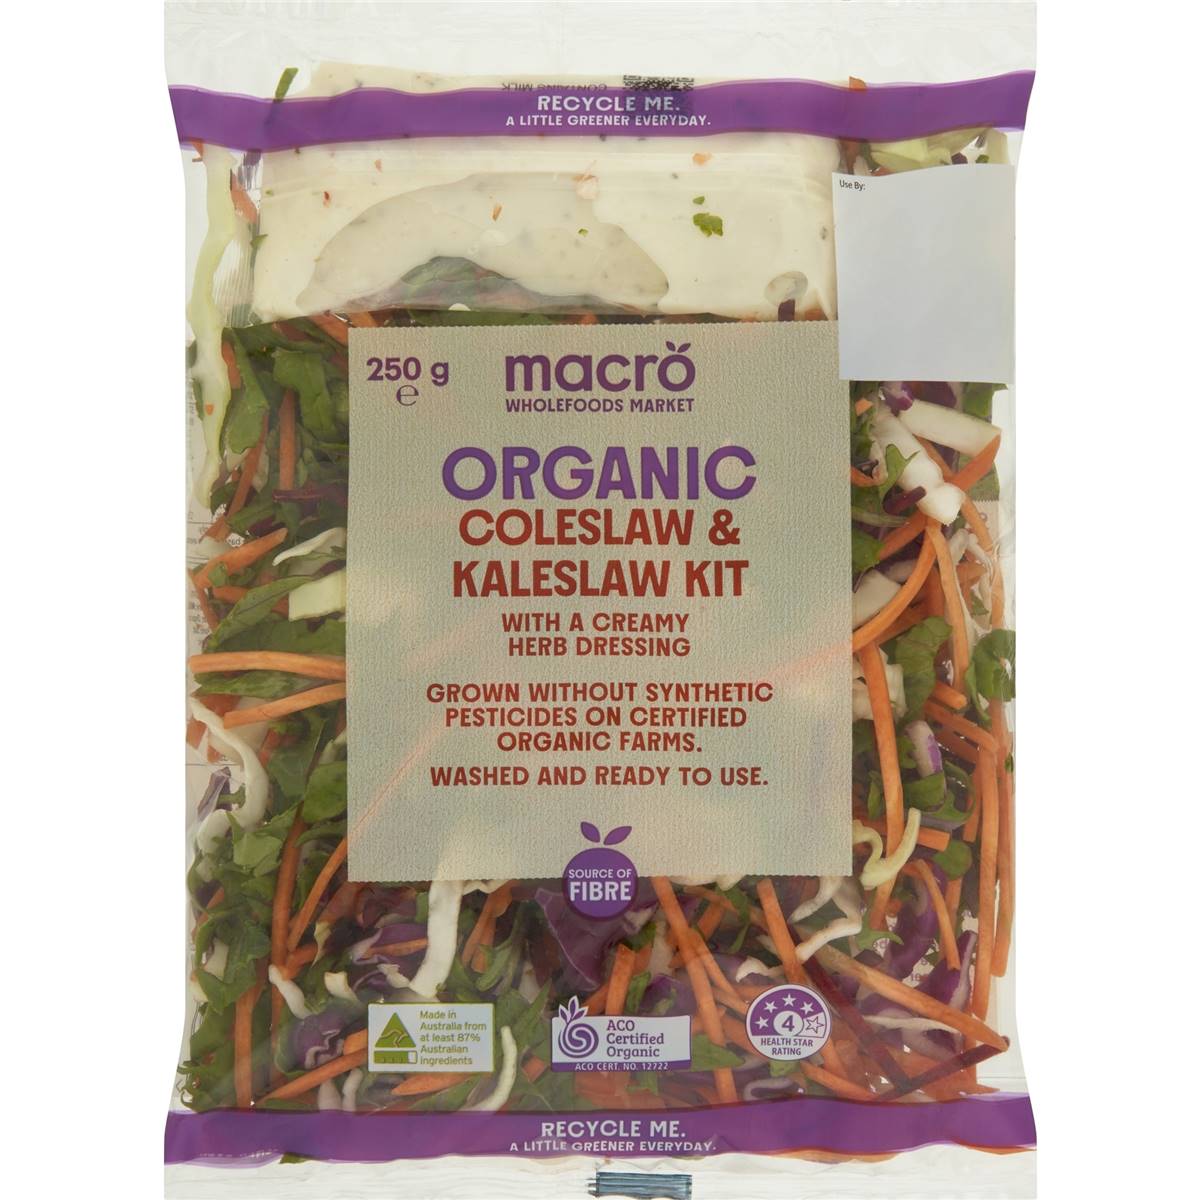 Calories in Macro Organic Coleslaw & Kale Slaw Kit